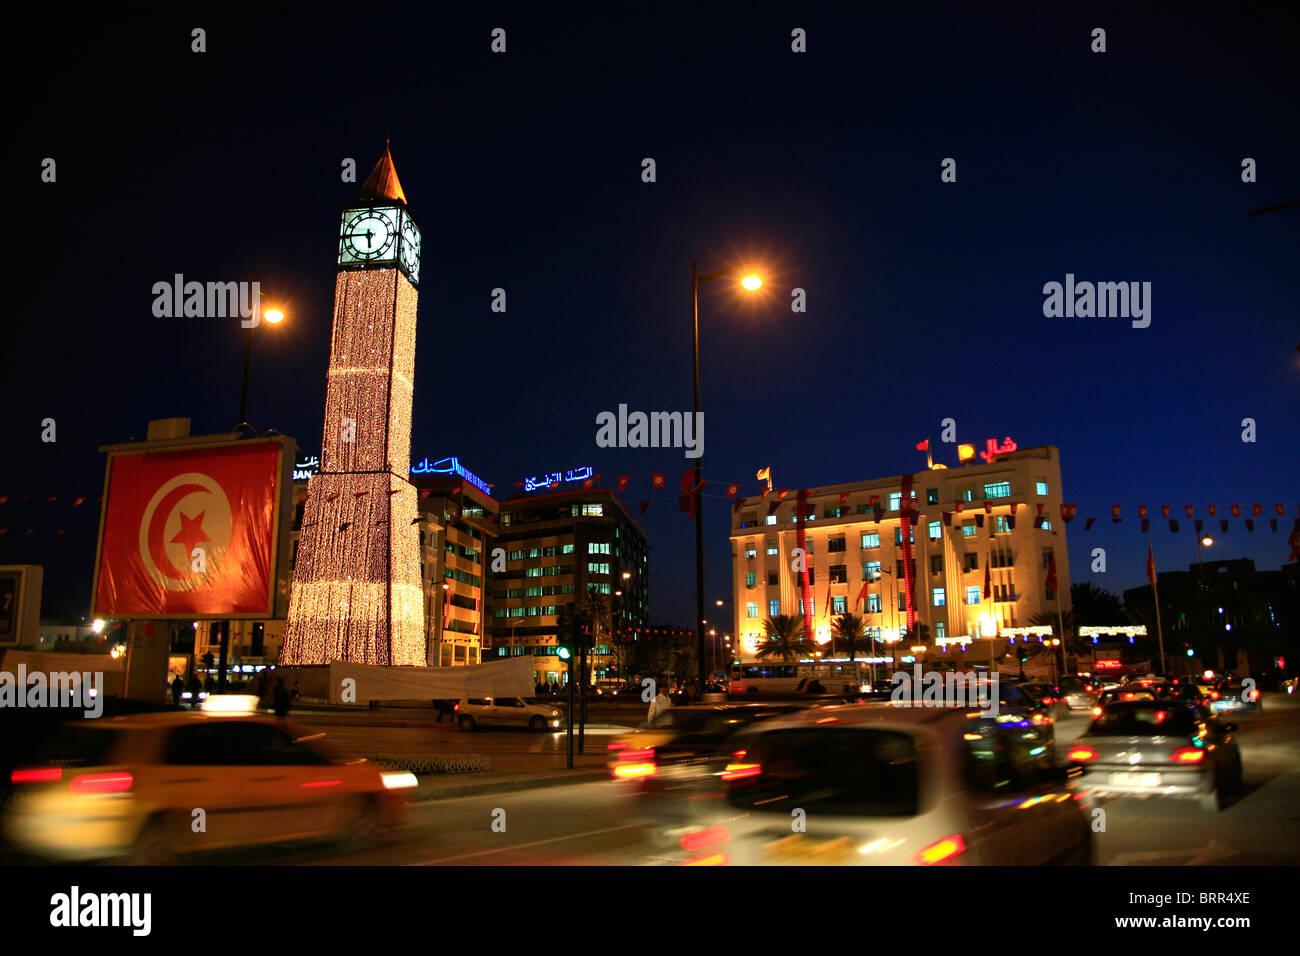 Night time city scene with clock tower and traffic on the main street of Tunis, Avenue Habib Bourguiba Stock Photo